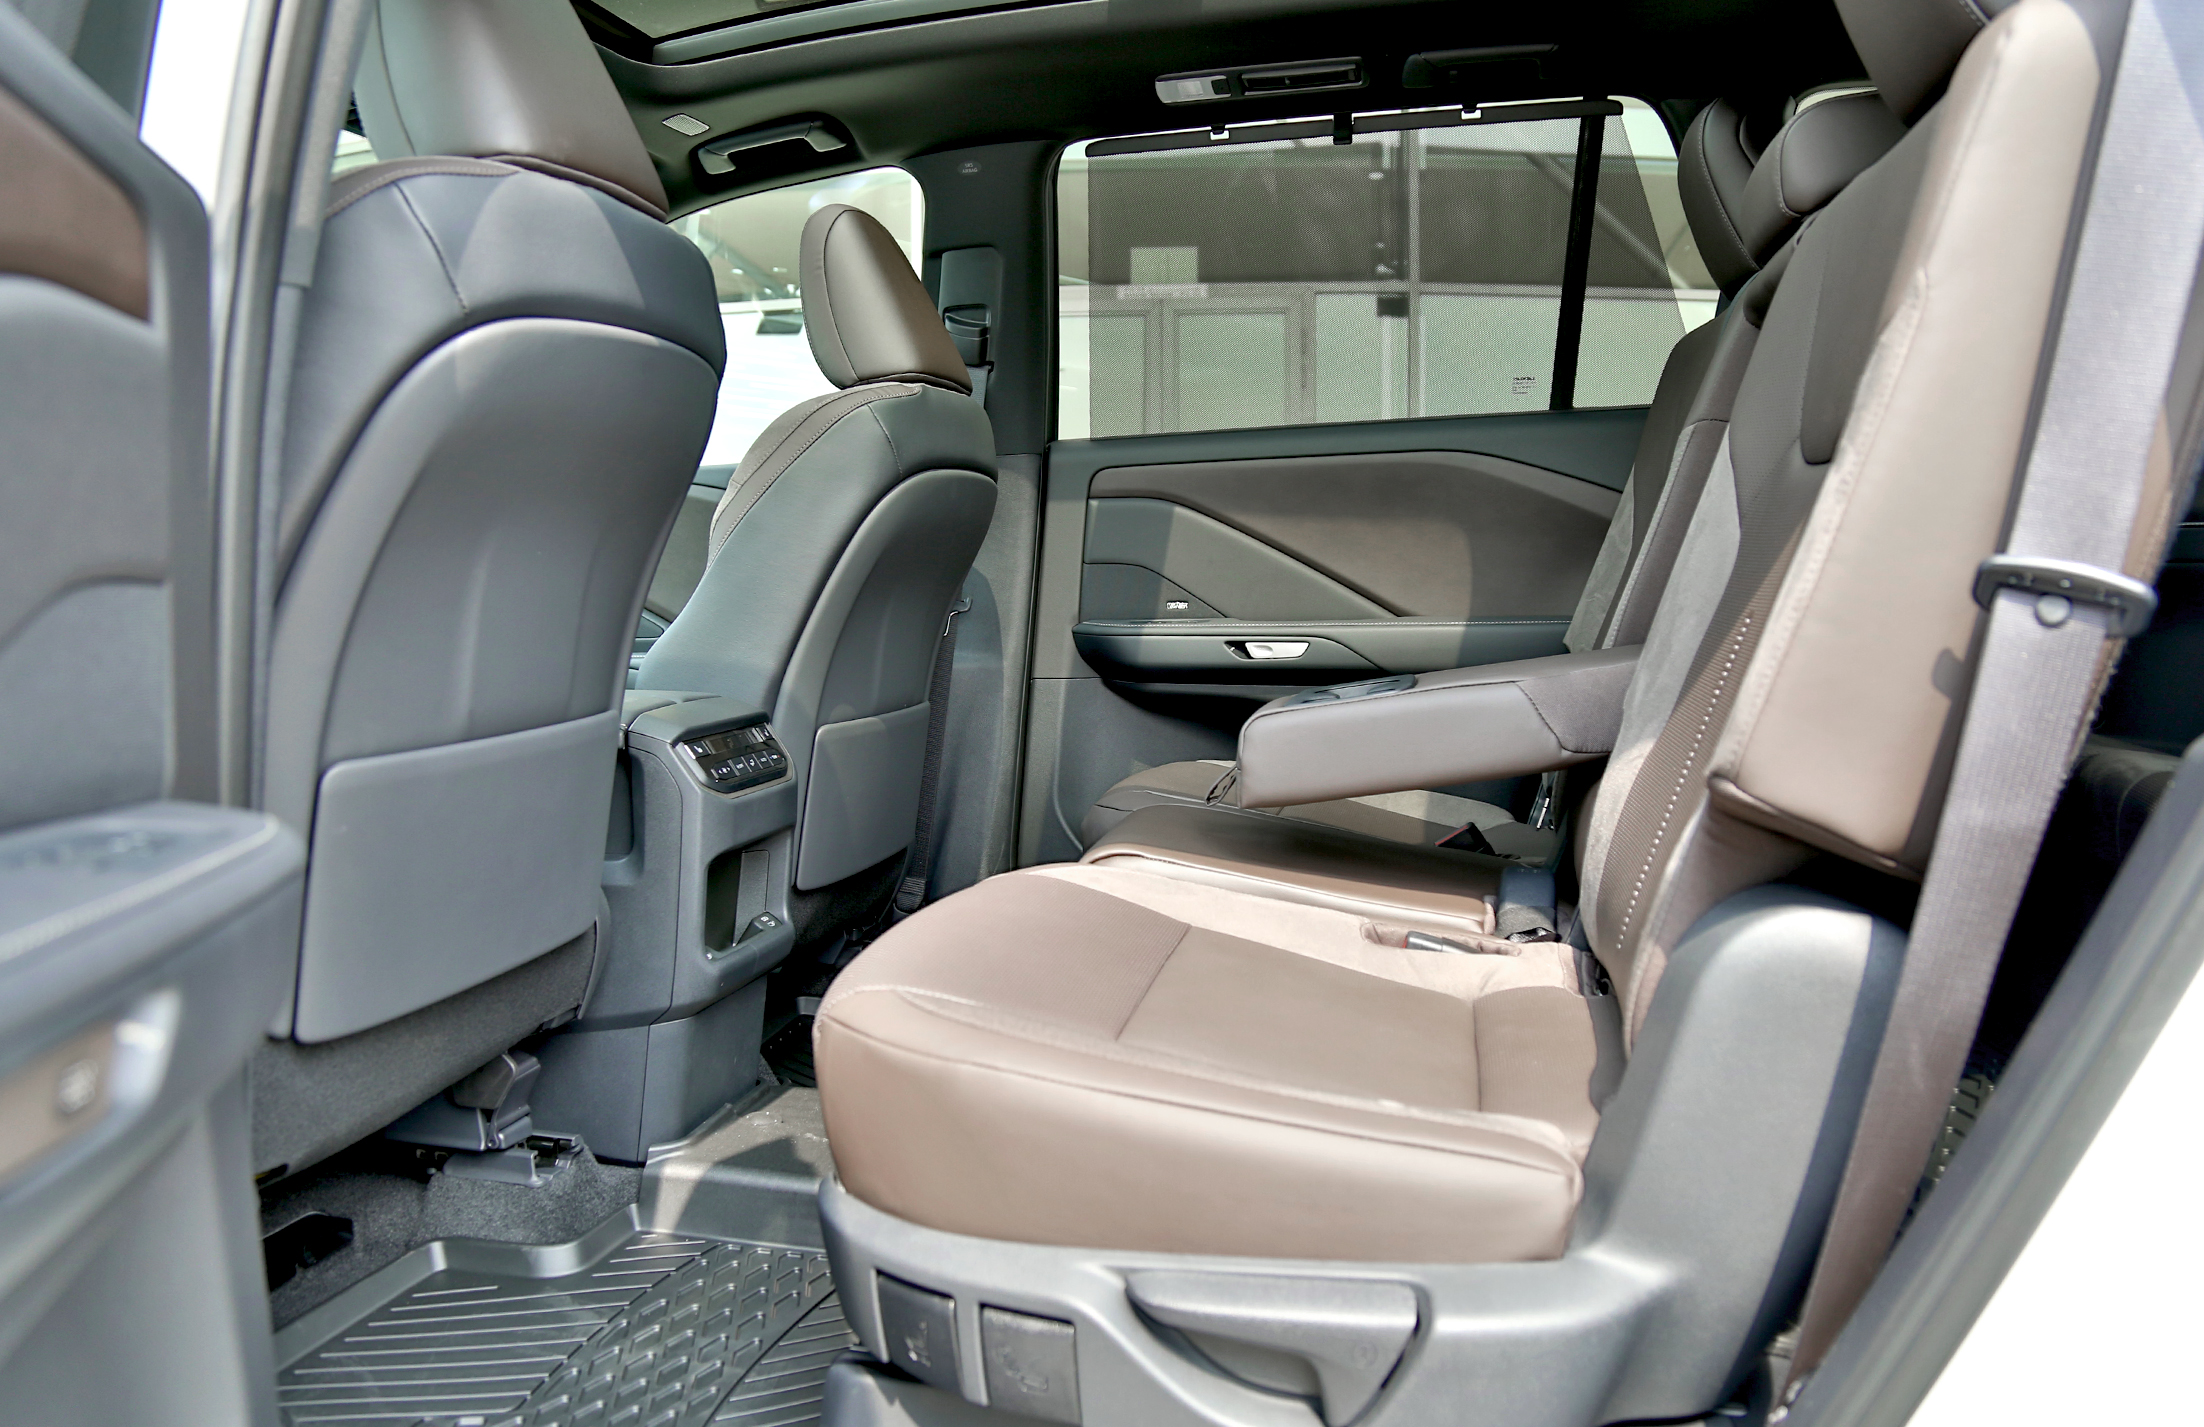 Lexus TX 350 EXECUTIVE 7seats. For Local Registration +10% Prestige Motor Dubai